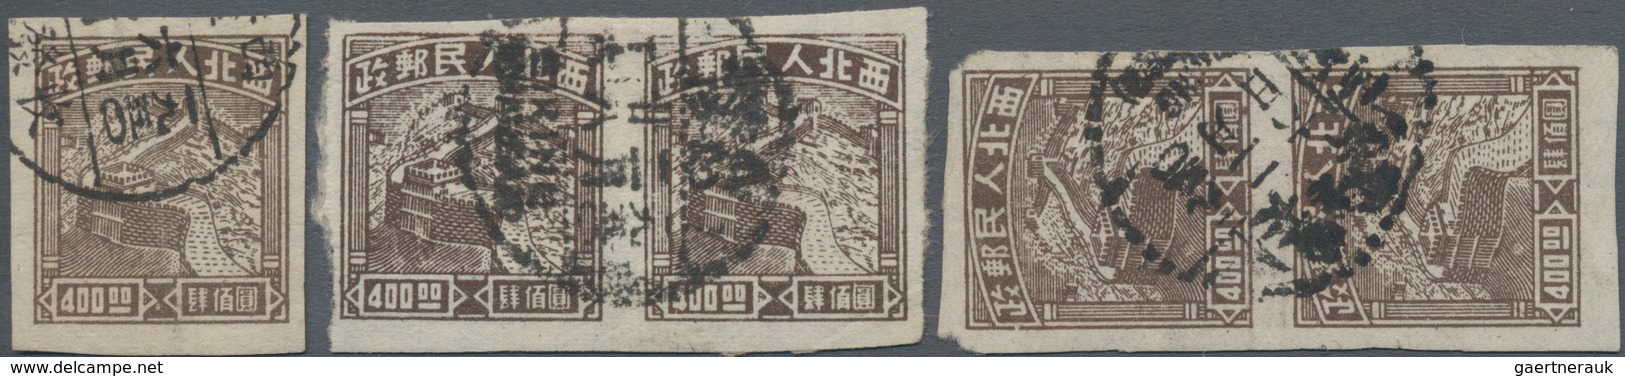 China - Volksrepublik - Provinzen: Northwest China, 1949, Northwest People’s Post, Mao Zedong Great